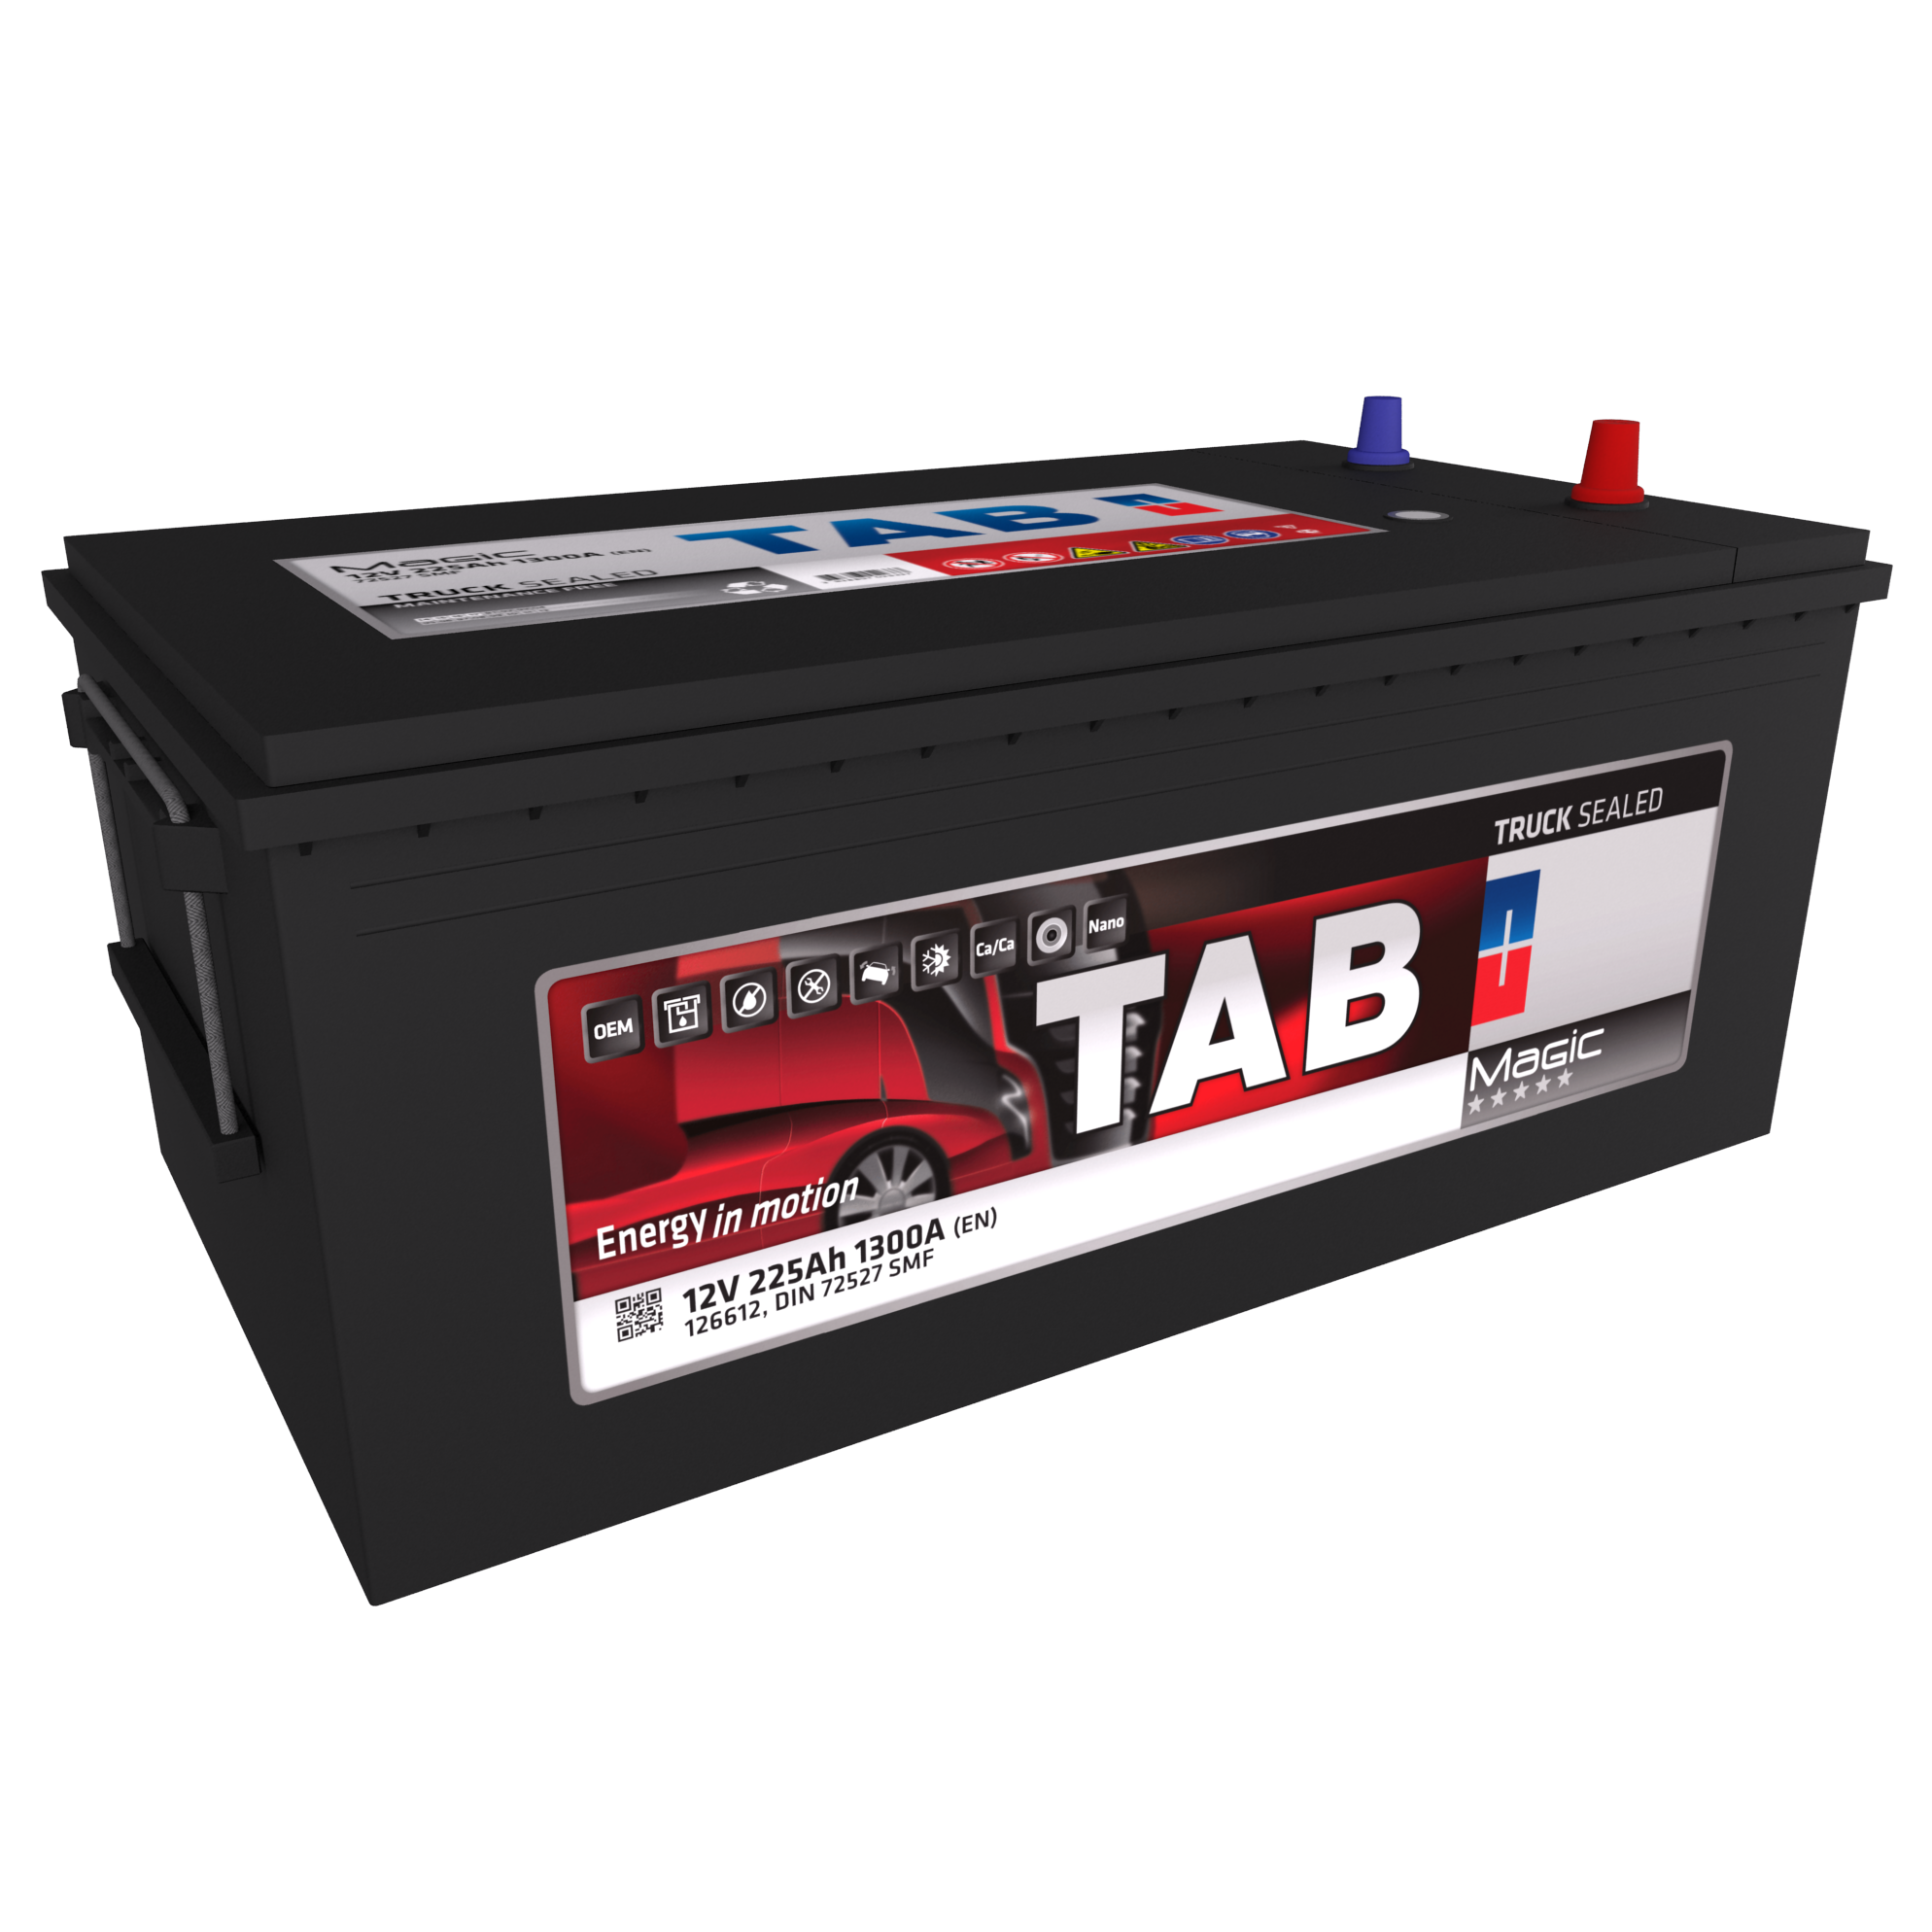 Tab Magic battery 100AH 900A 350x175x190 (-+)